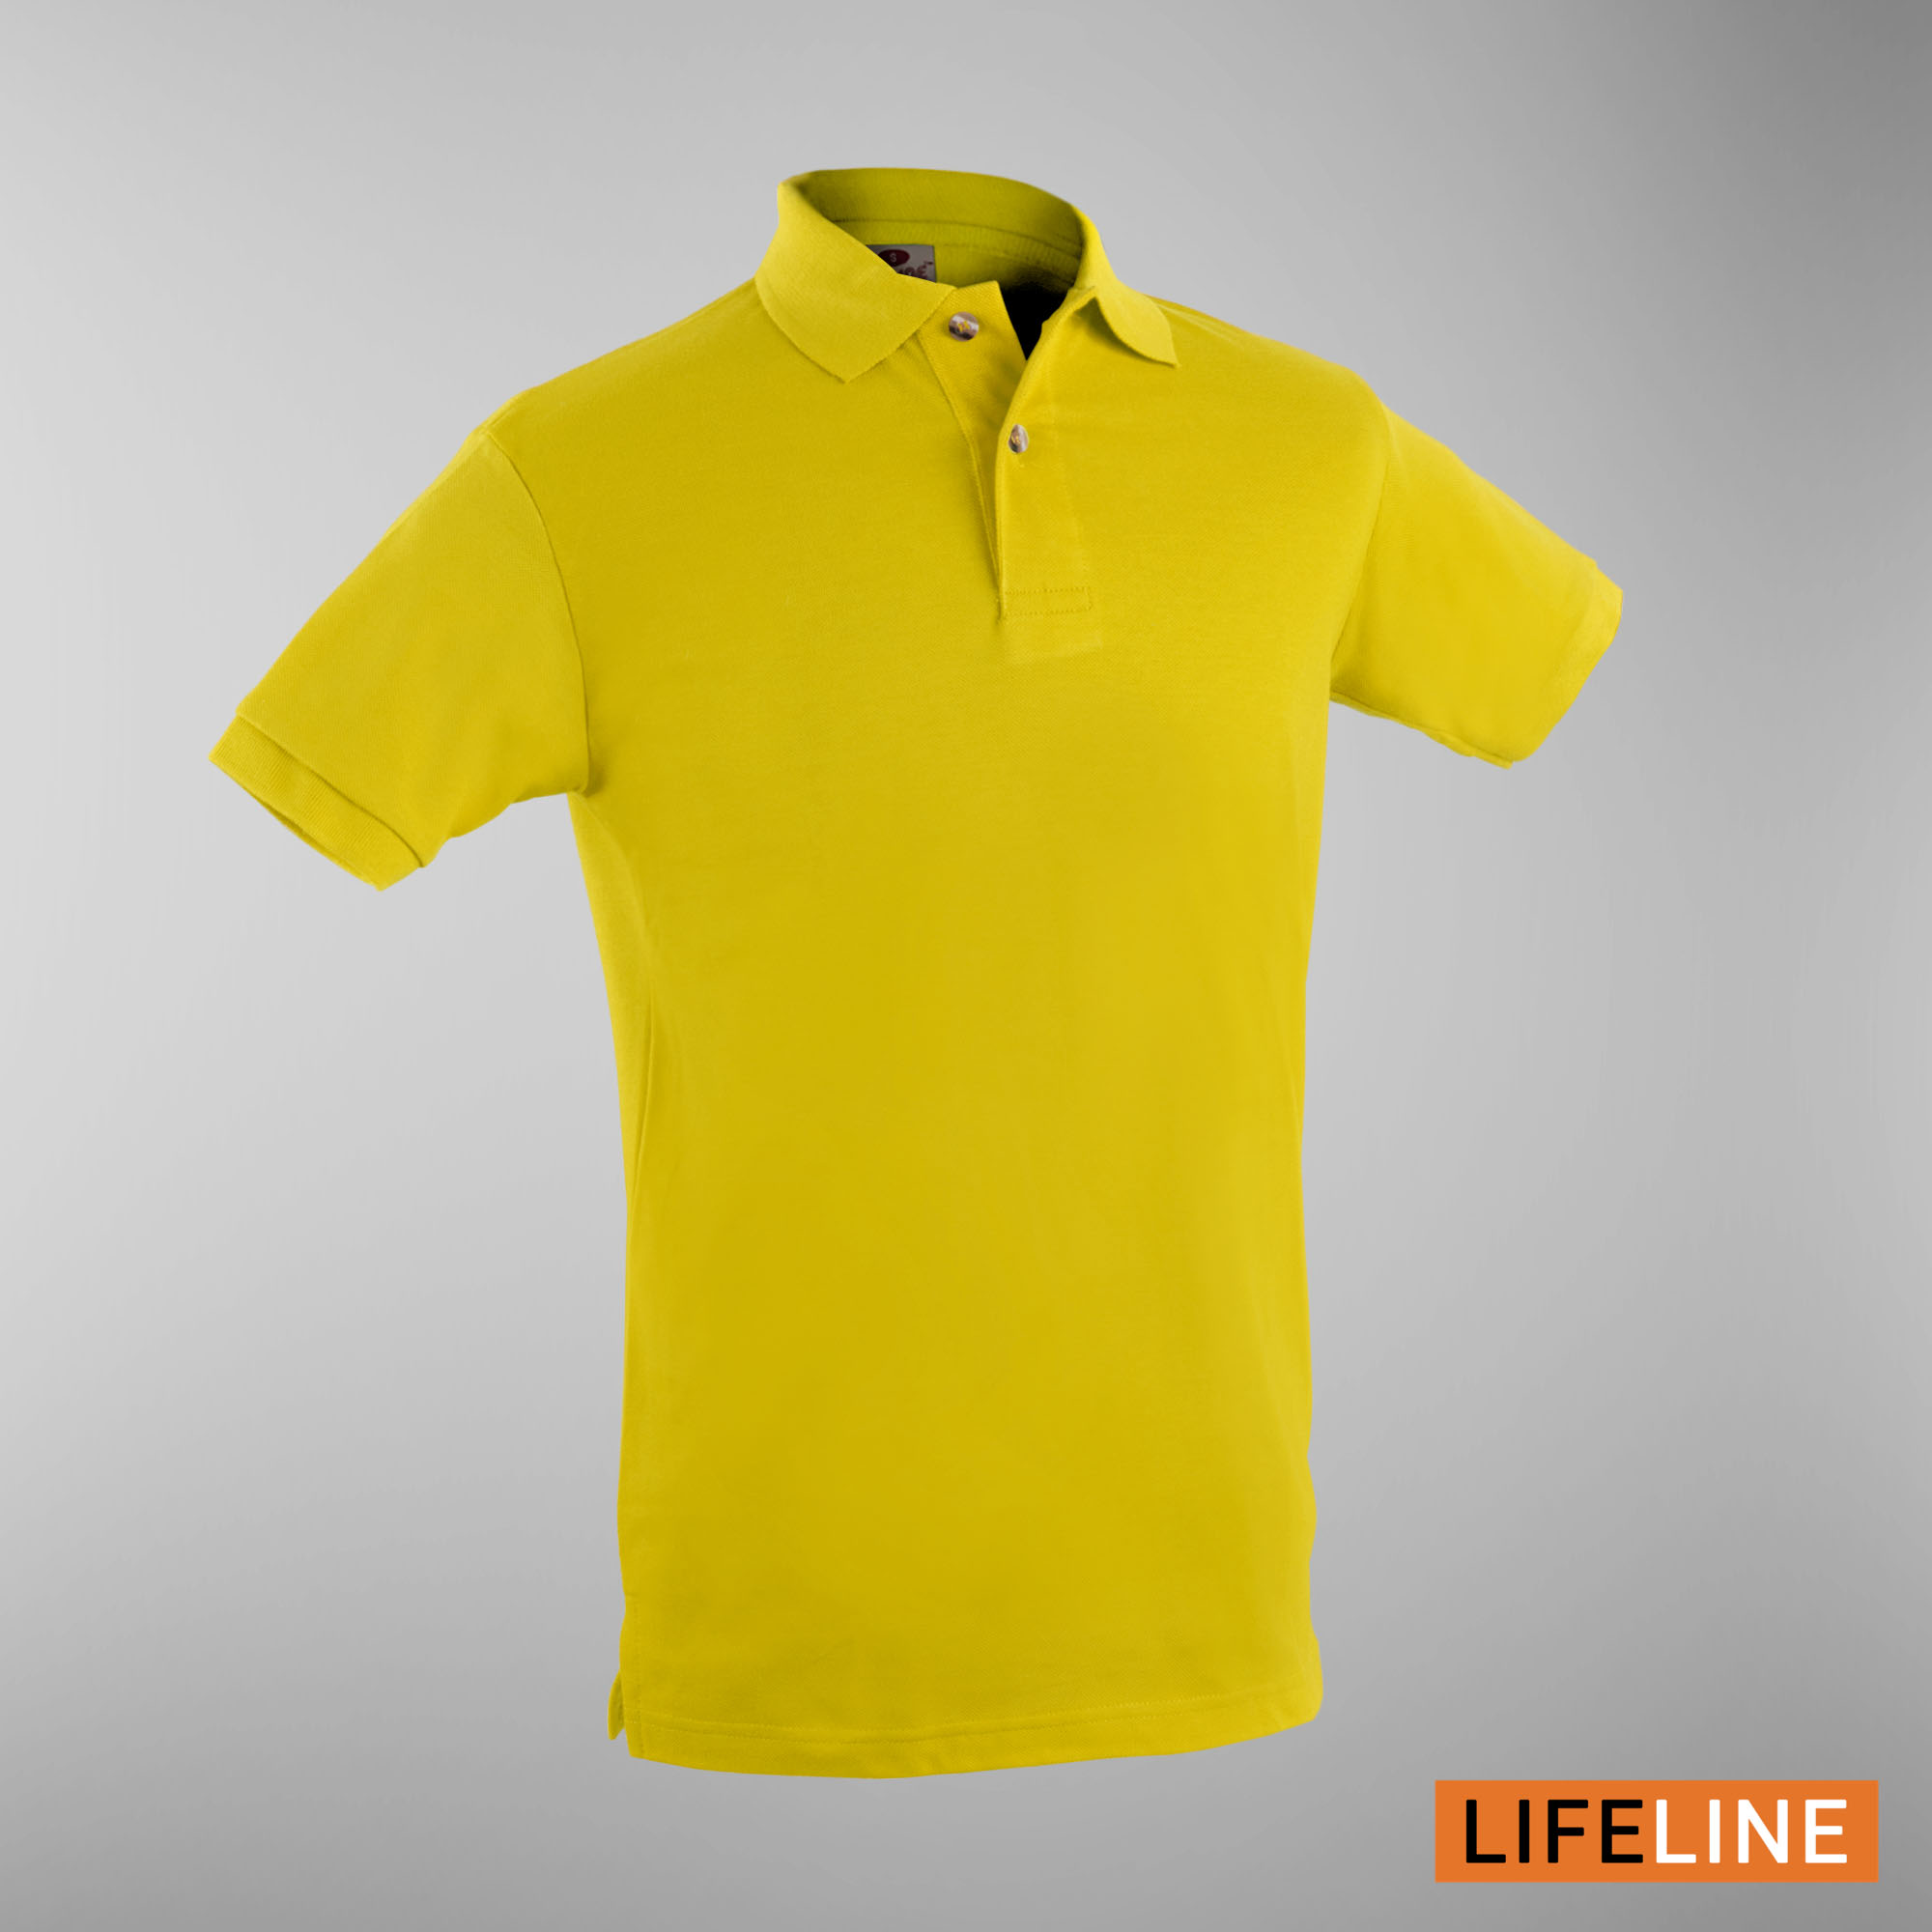 Lifeline Men’s Poloshirt (Canary Yellow)